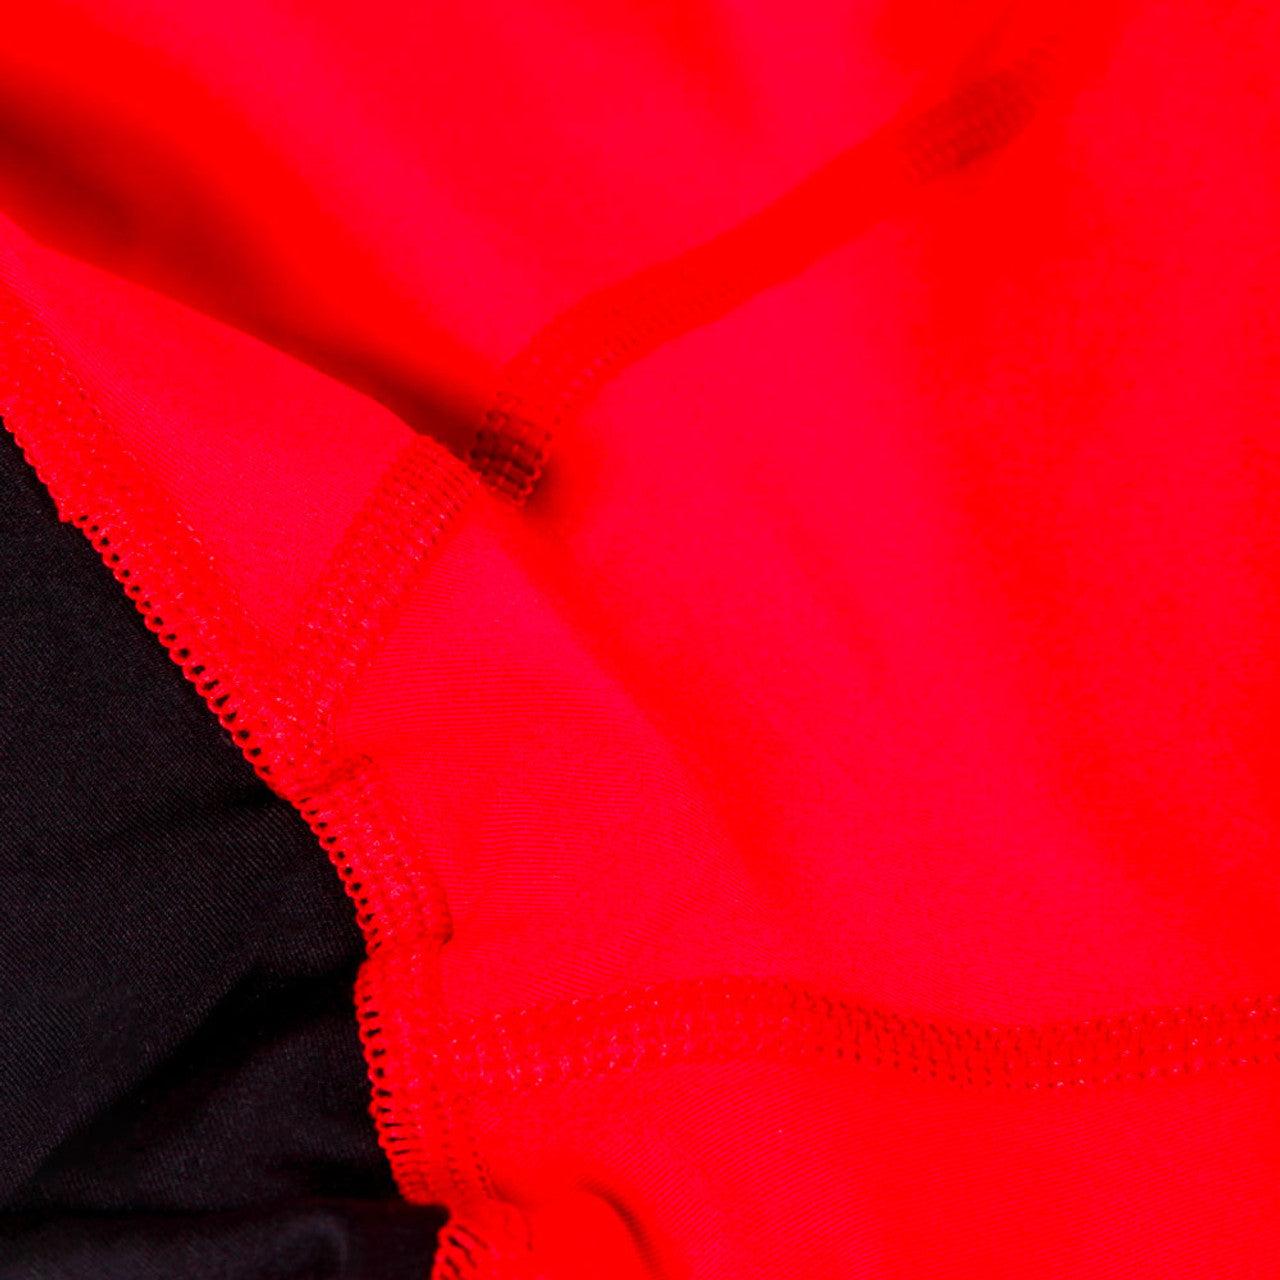 Staredown 2 Pro Vale tudo Shorts - Red / Black - Violent Art Shop